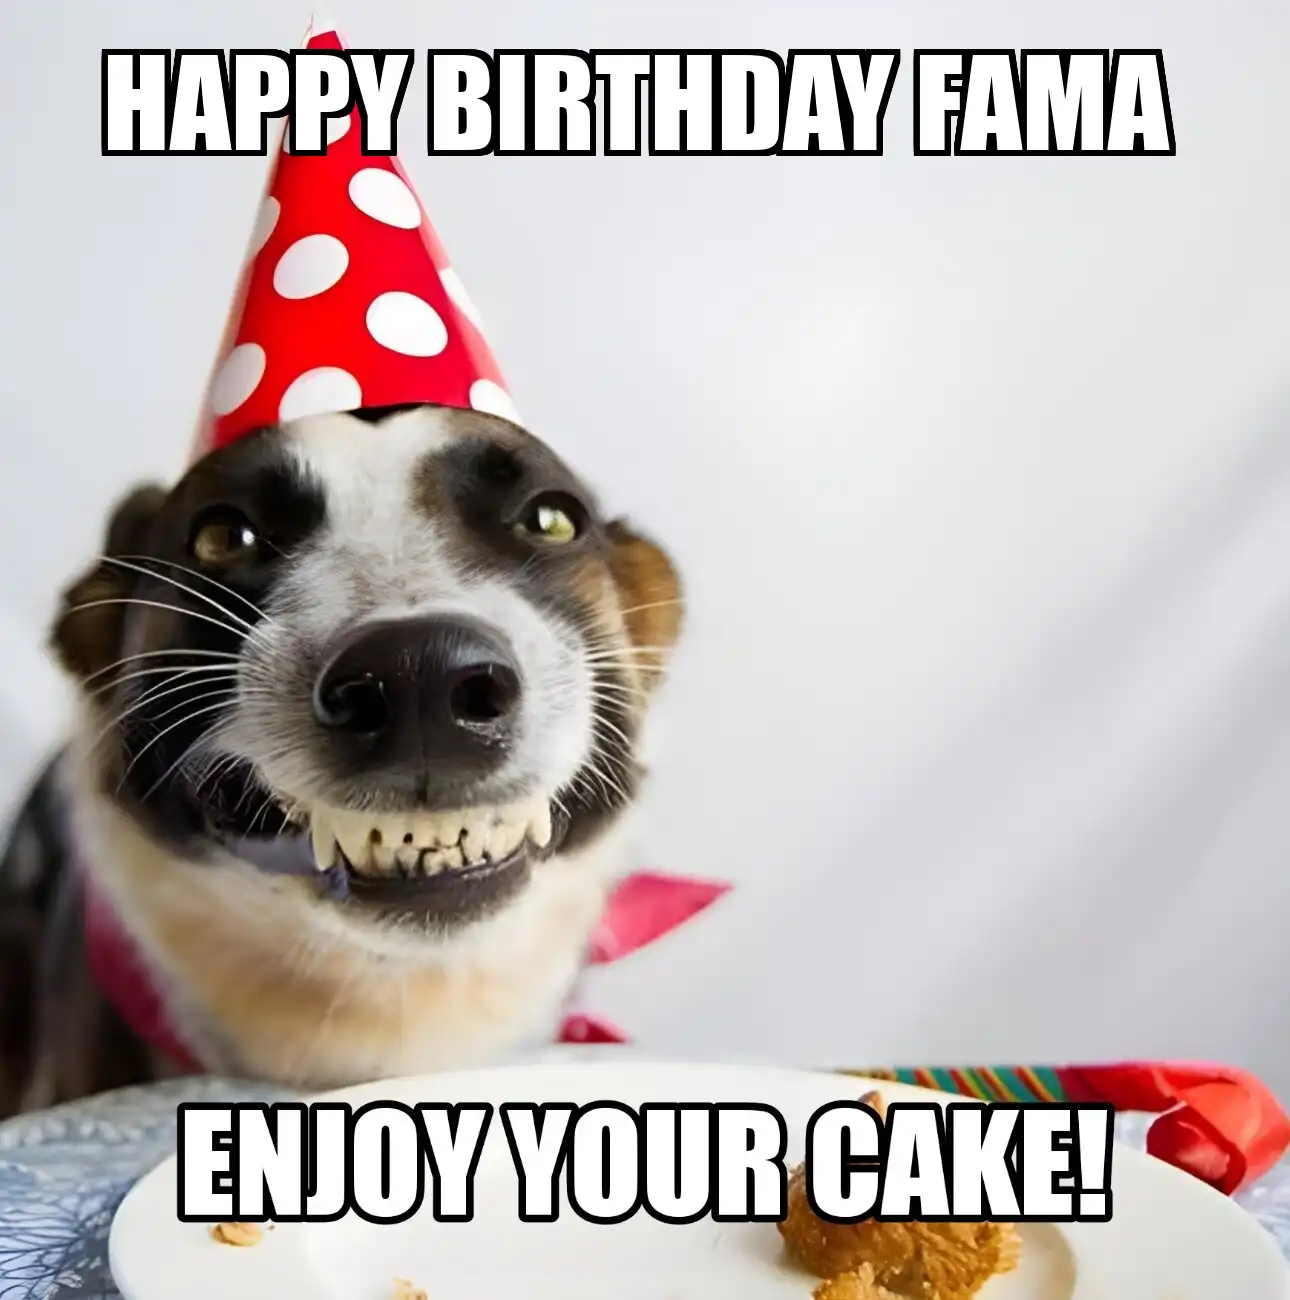 Happy Birthday Fama Enjoy Your Cake Dog Meme